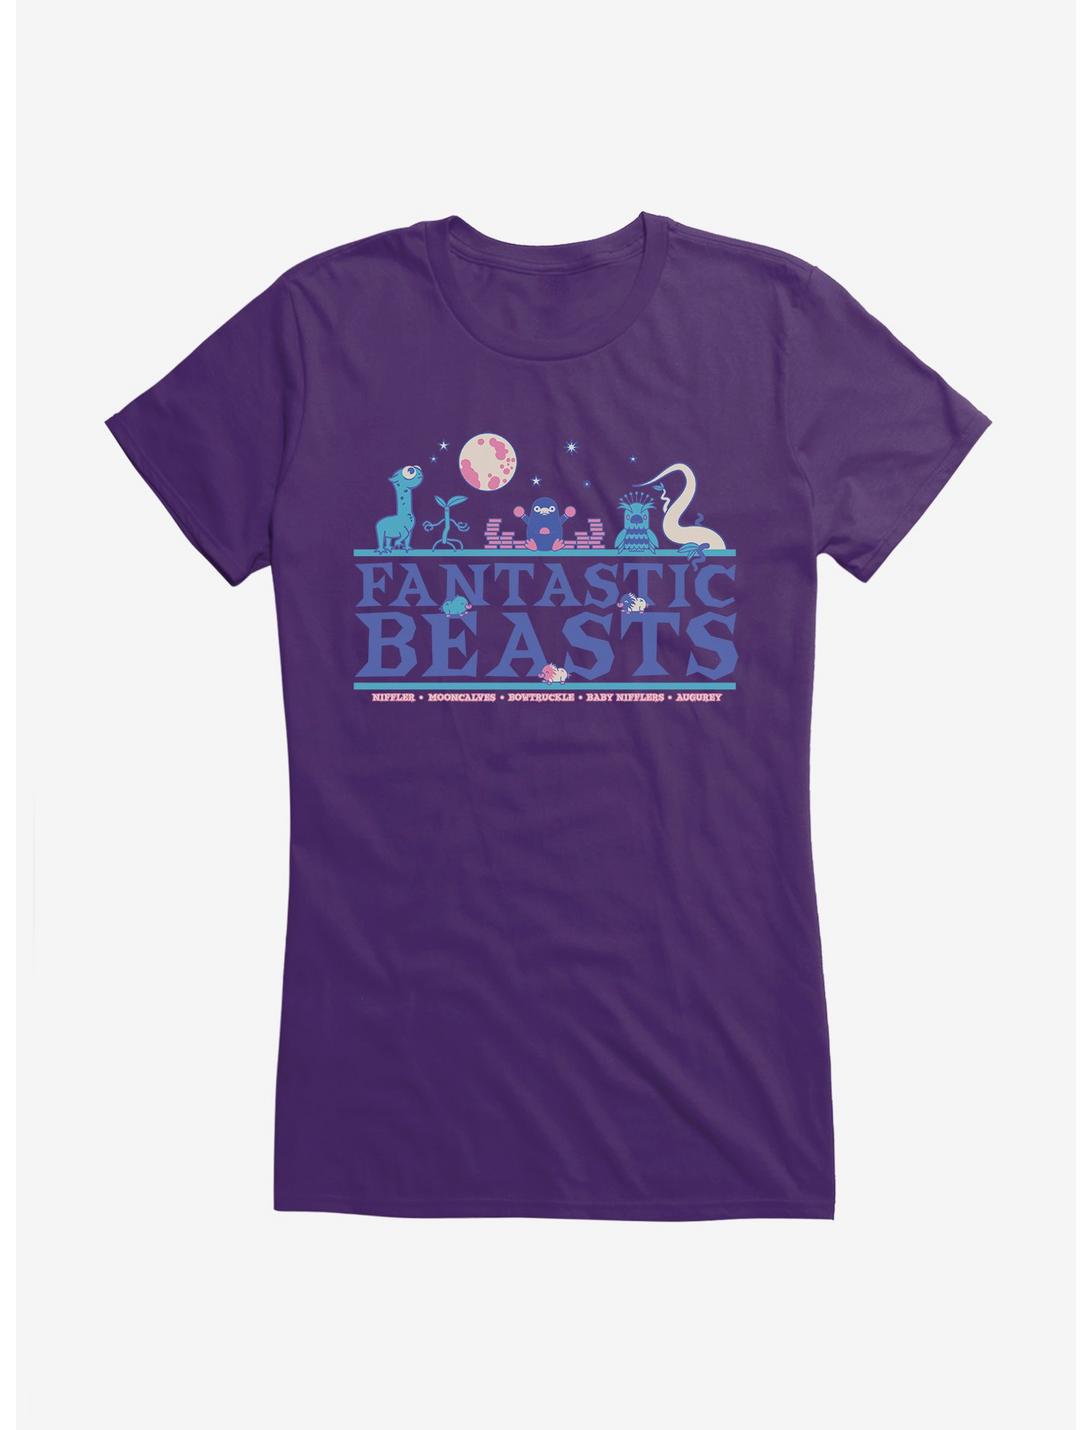 Fantastic Beasts Moon Beasts Girls T-Shirt, PURPLE, hi-res